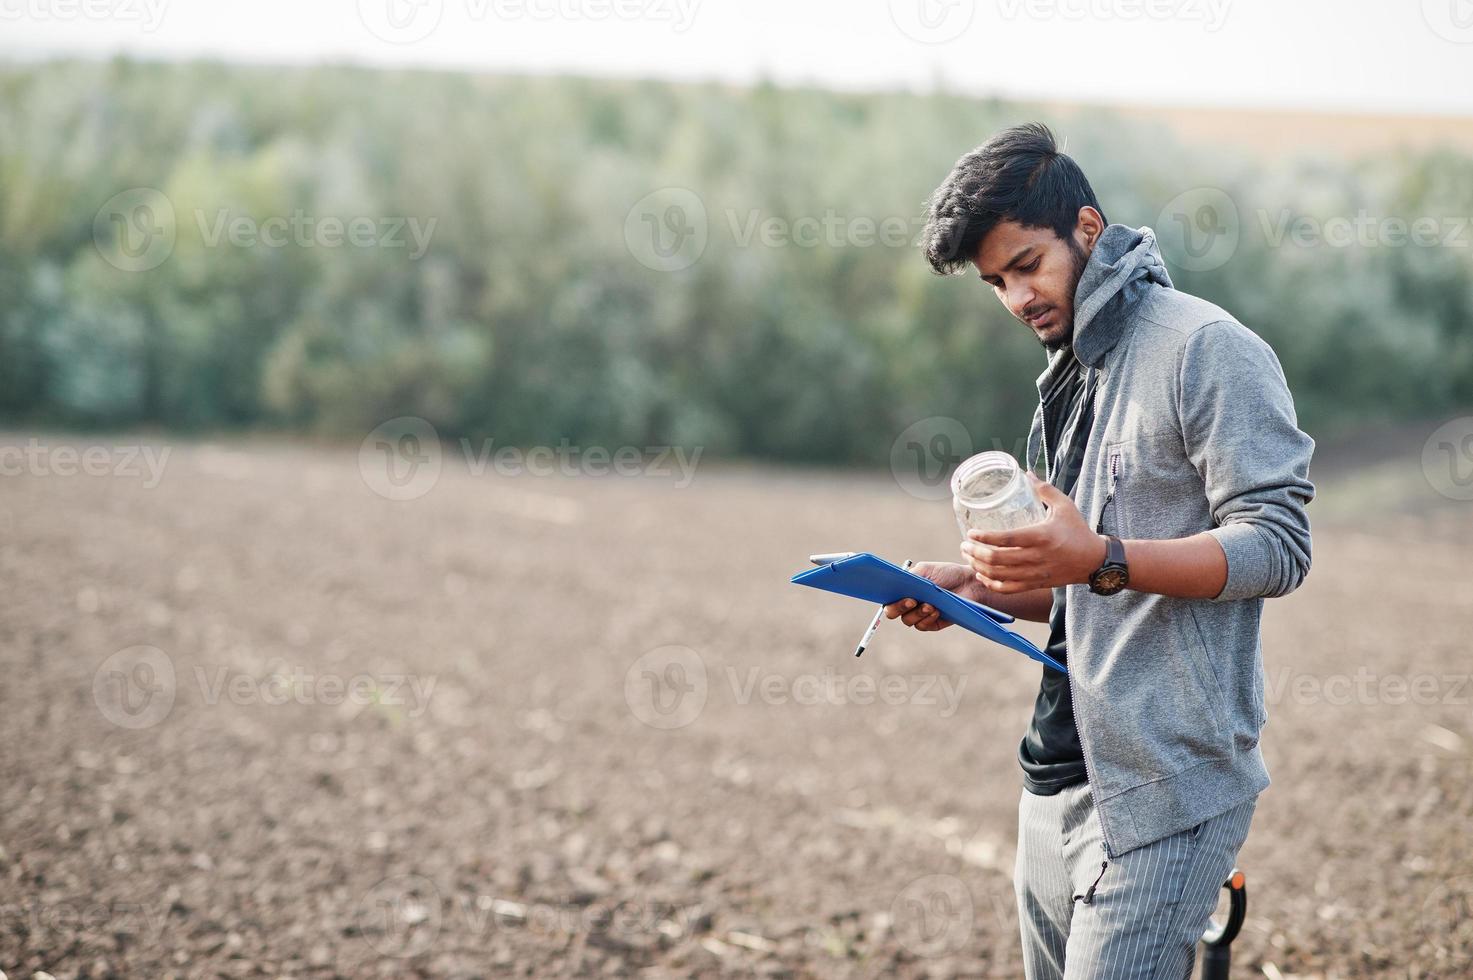 sydasiatisk agronombonde med spade som inspekterar svart jord. jordbruksproduktion koncept. foto